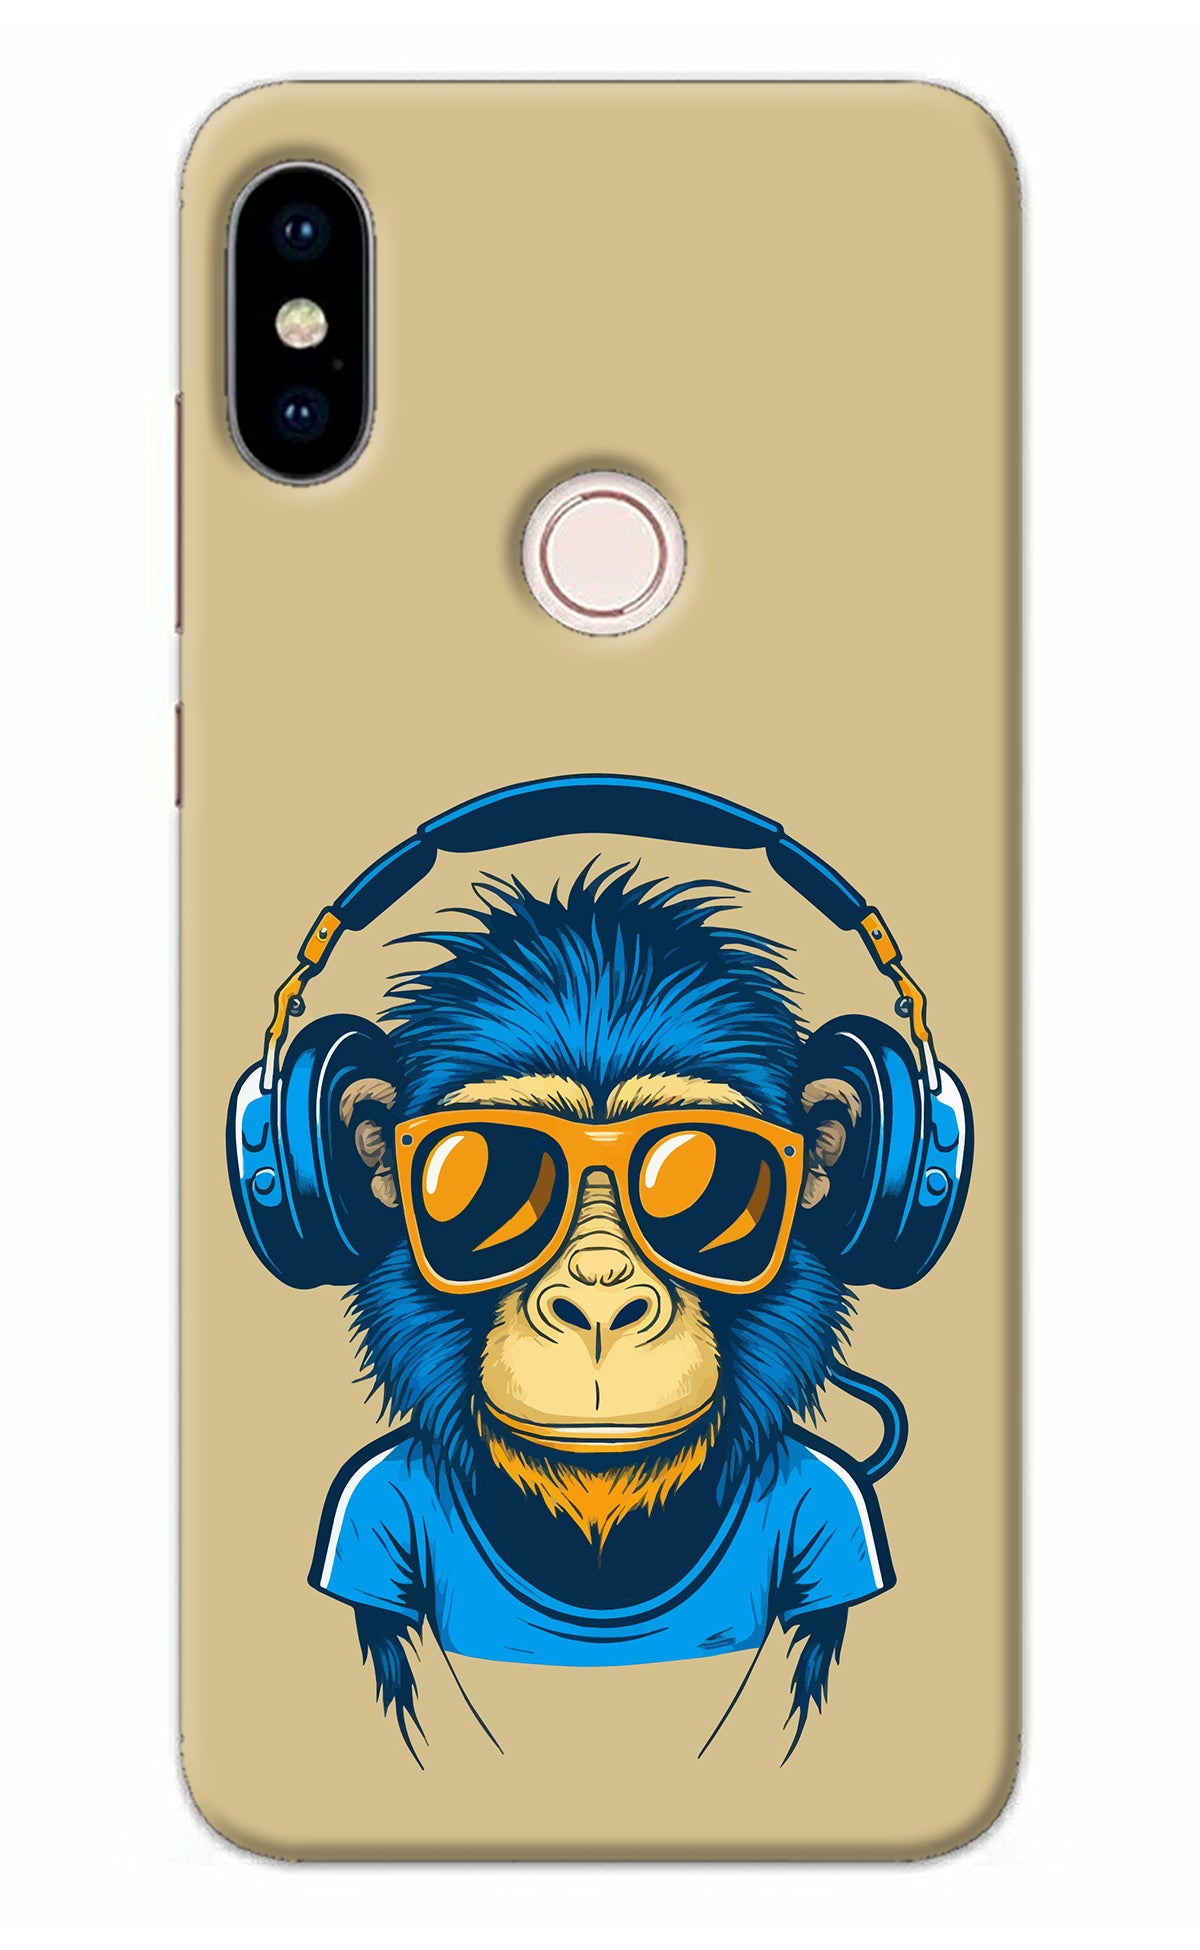 Monkey Headphone Redmi Note 5 Pro Back Cover